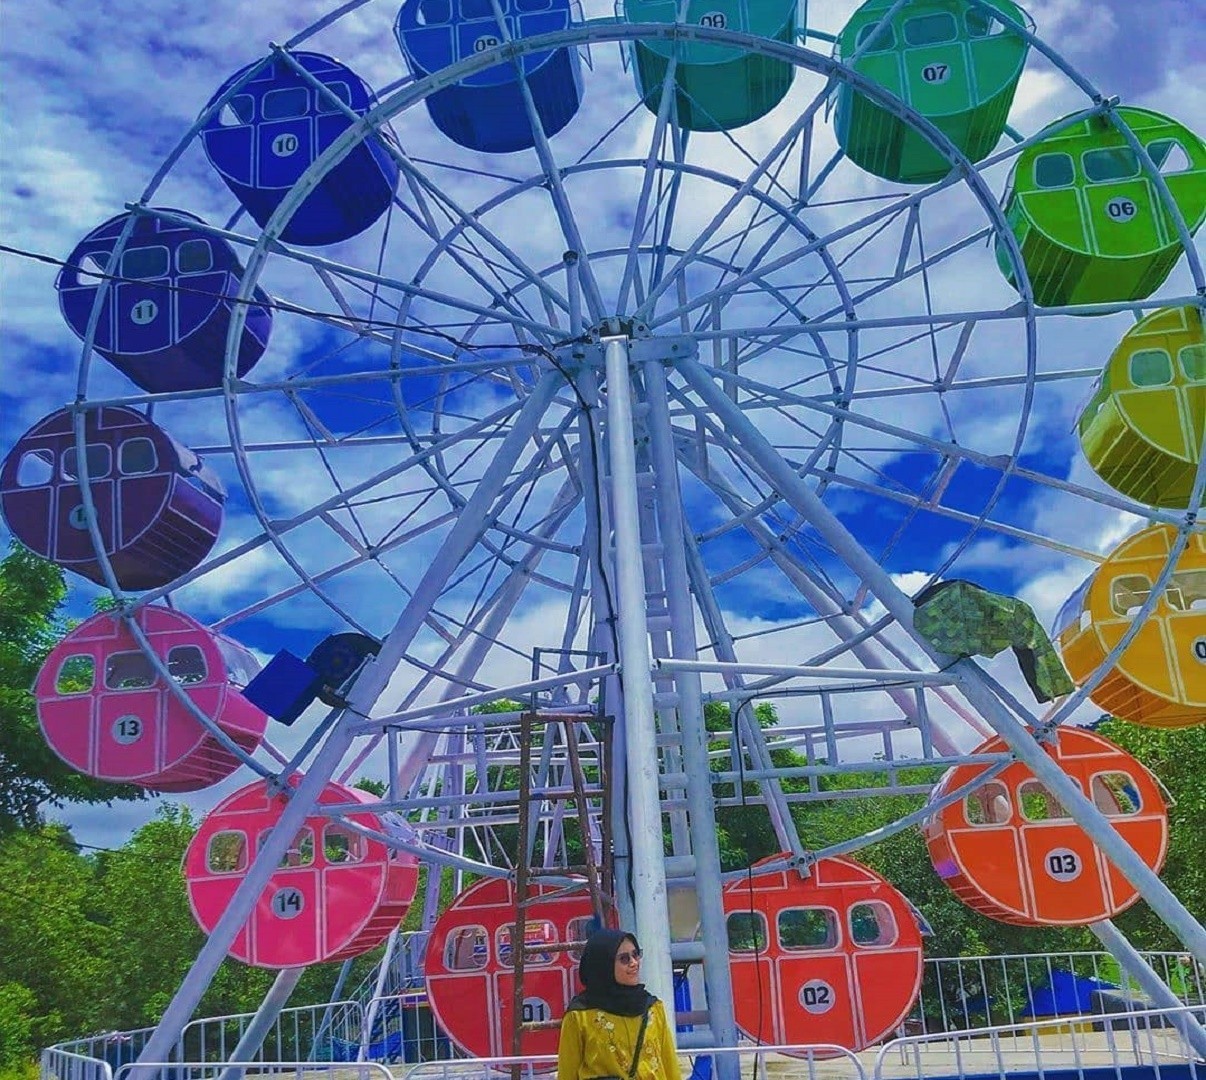 wahana Ferris wheel